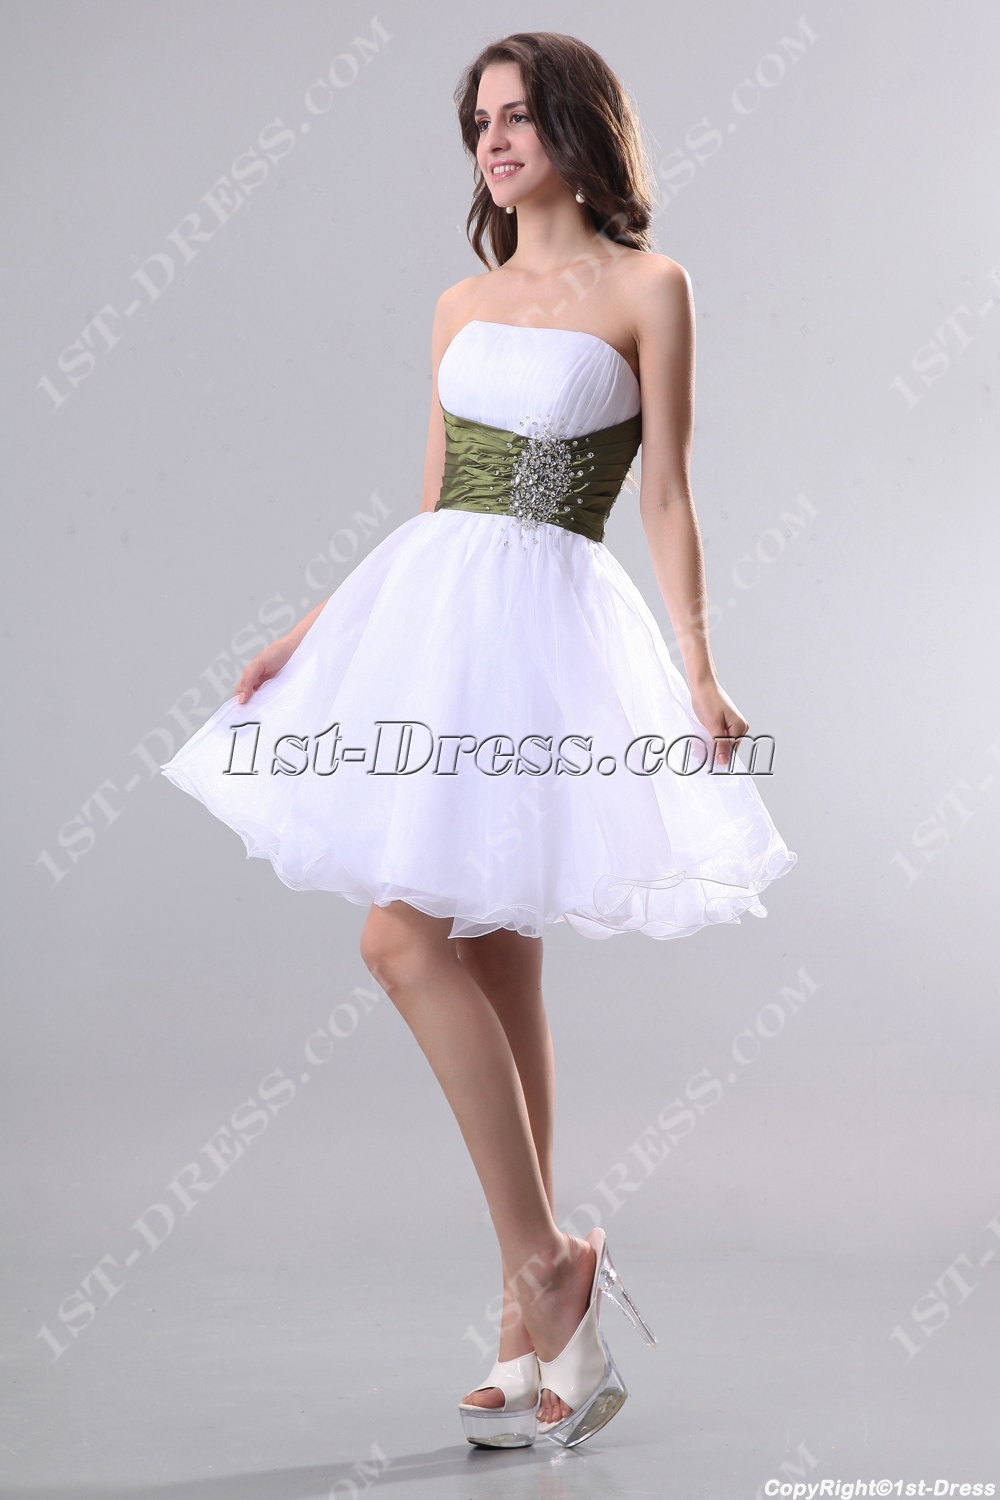 images/201311/big/Pretty-White-and-Olive-Green-Graduation-Dress-3495-b-1-1384265567.jpg